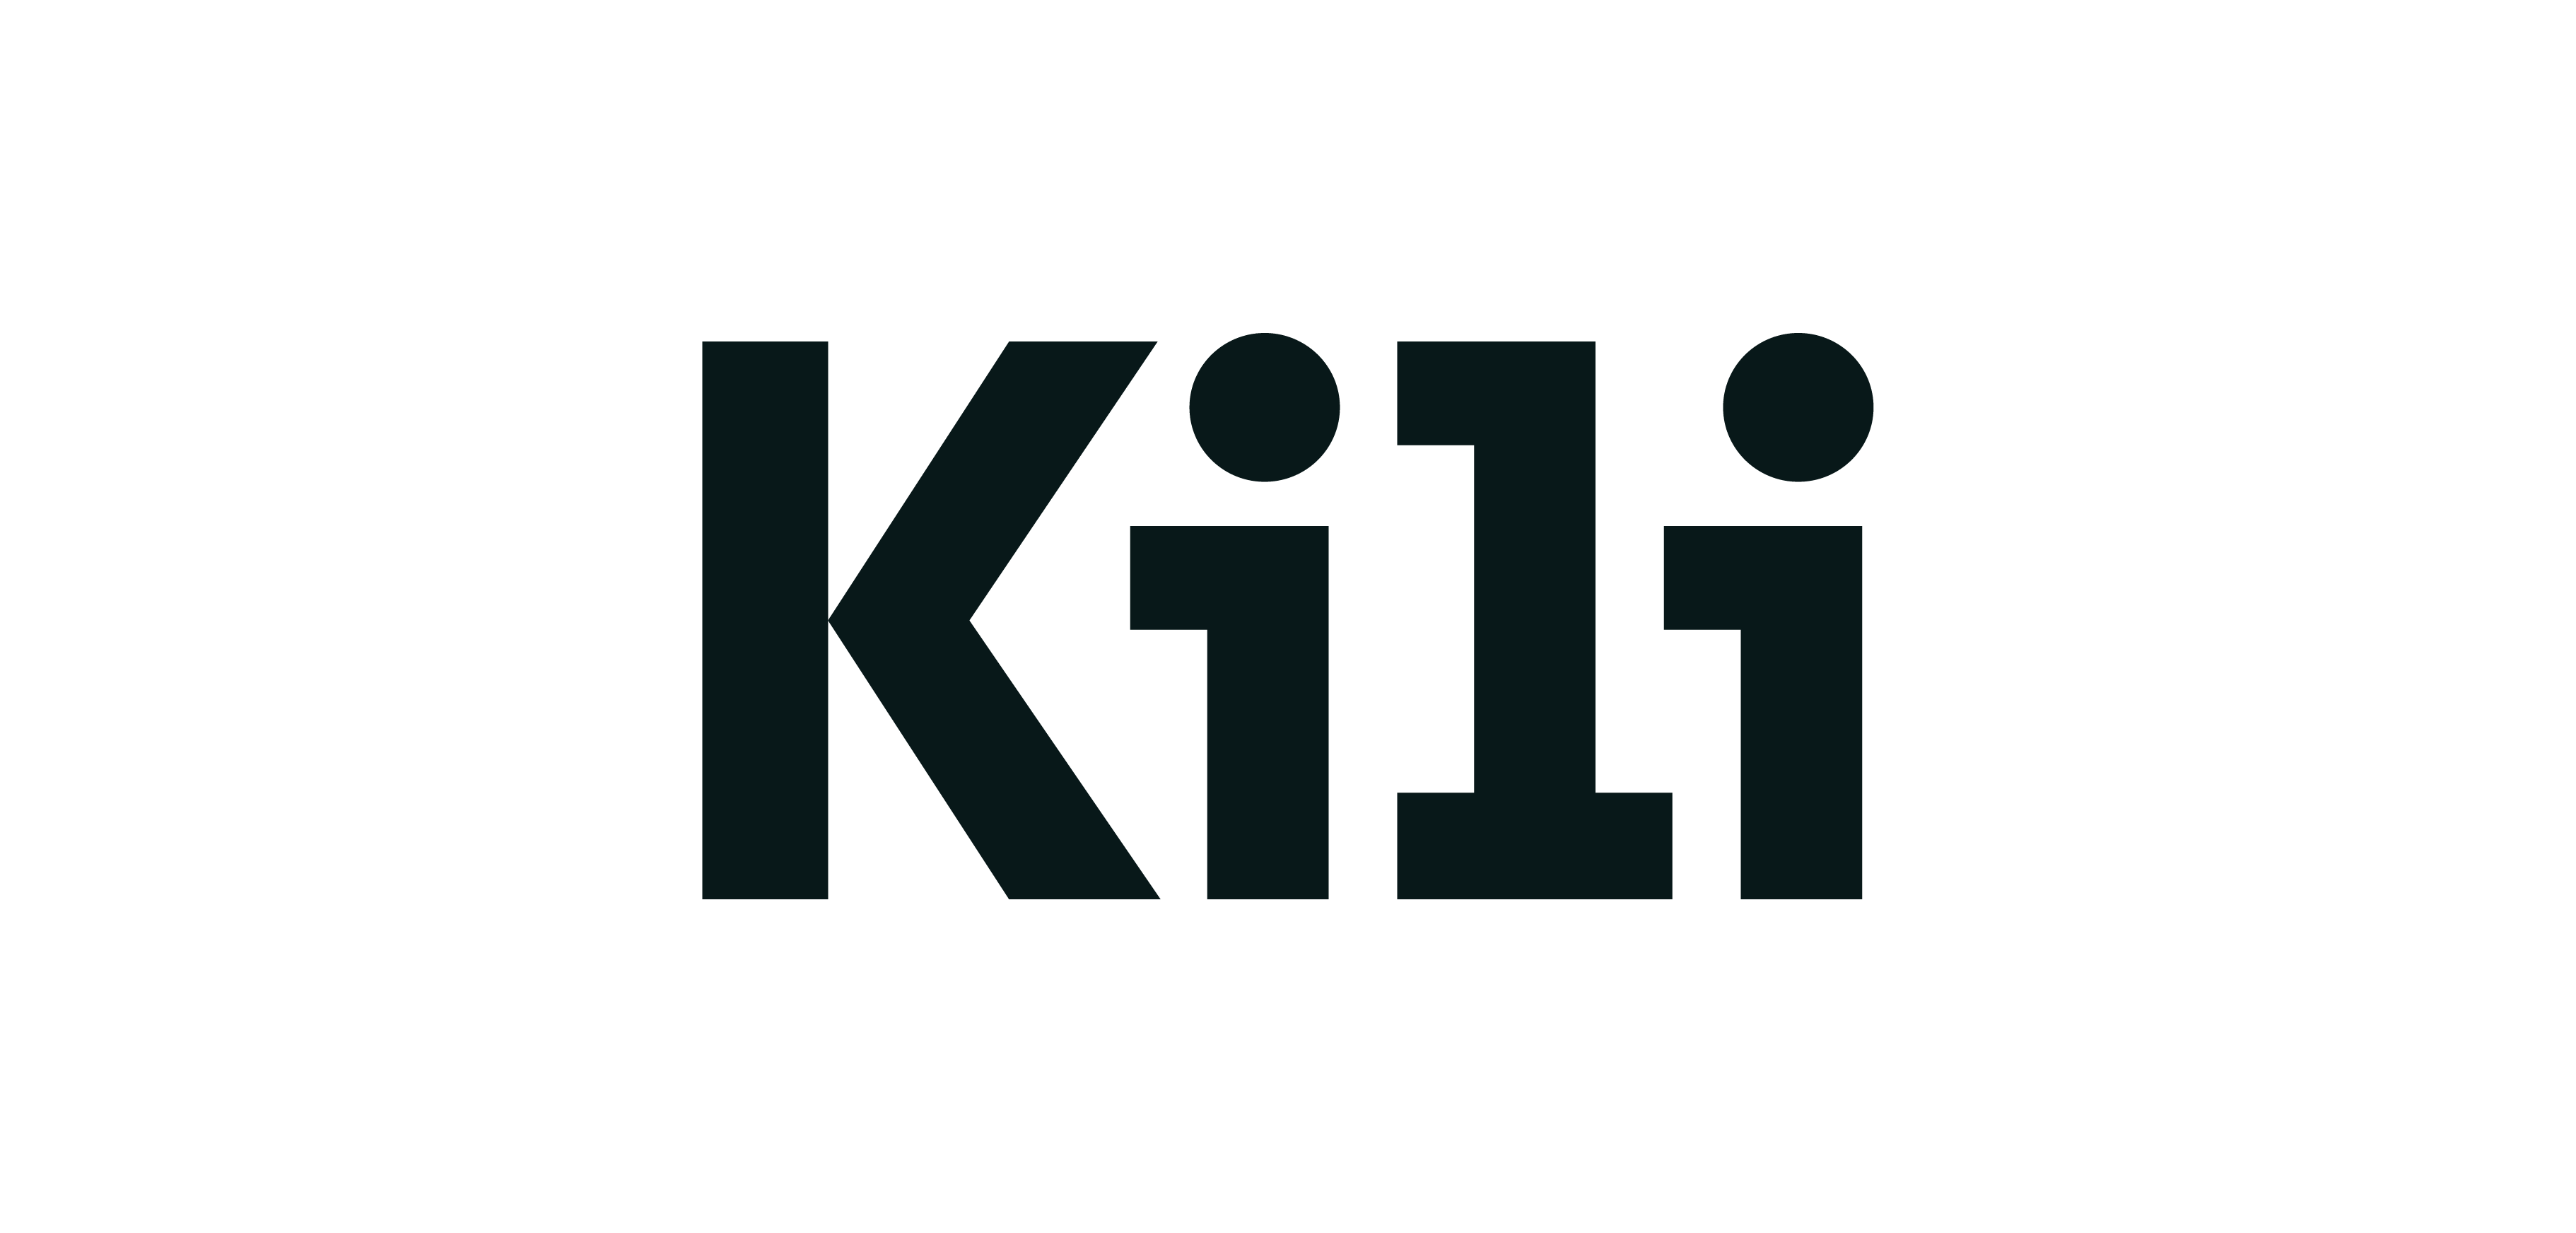 Kili Technology